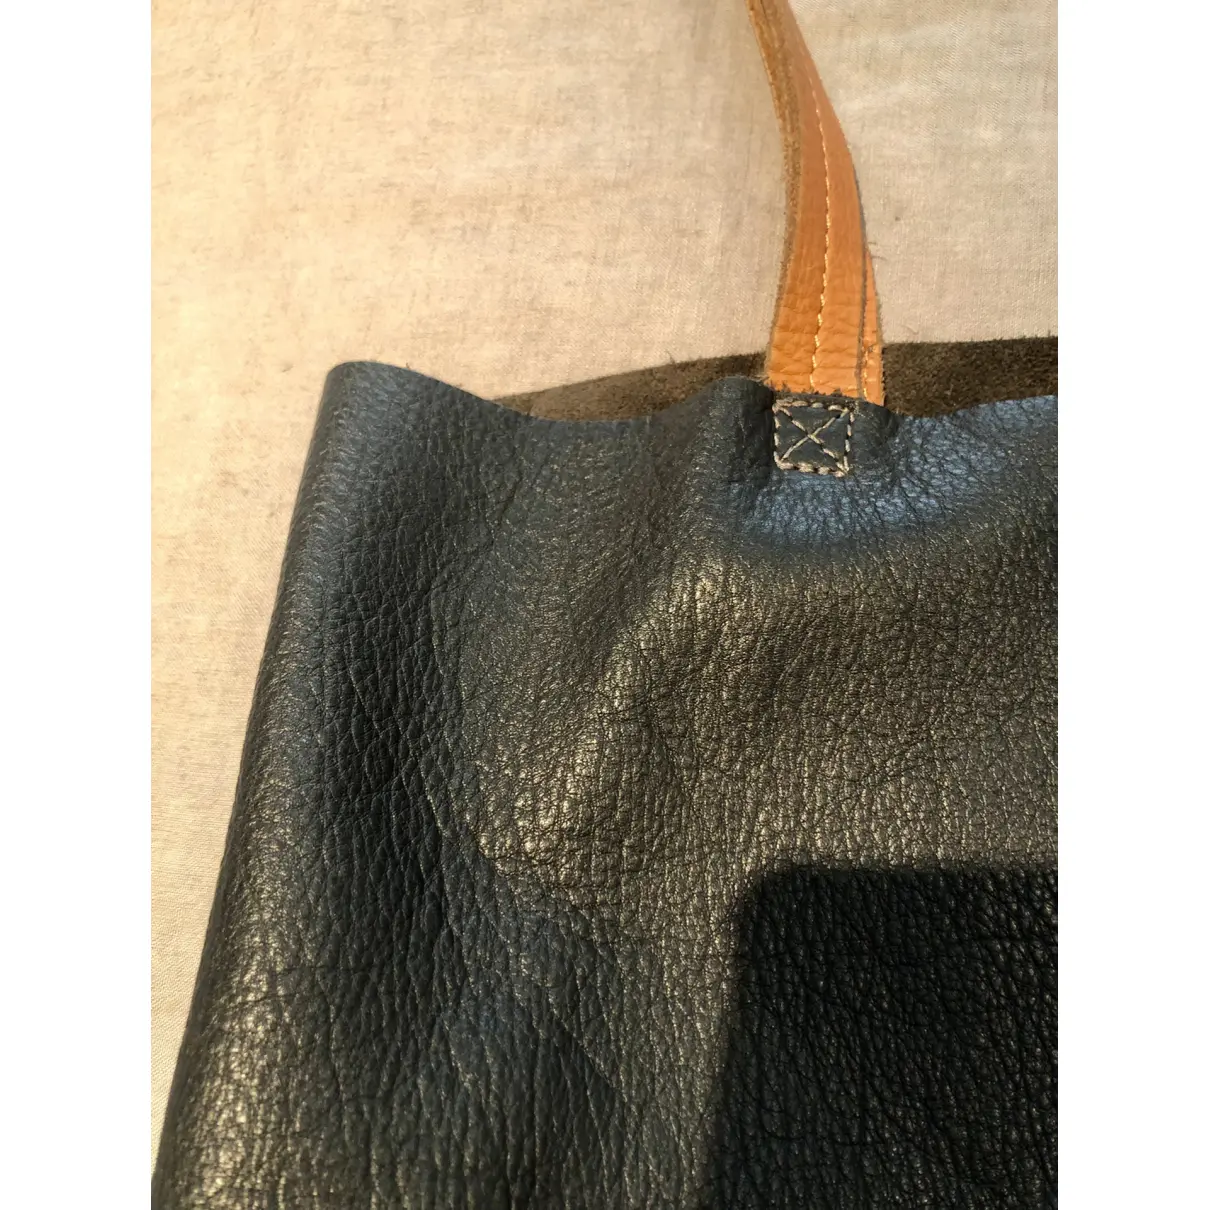 Buy Petite Mendigote Leather handbag online